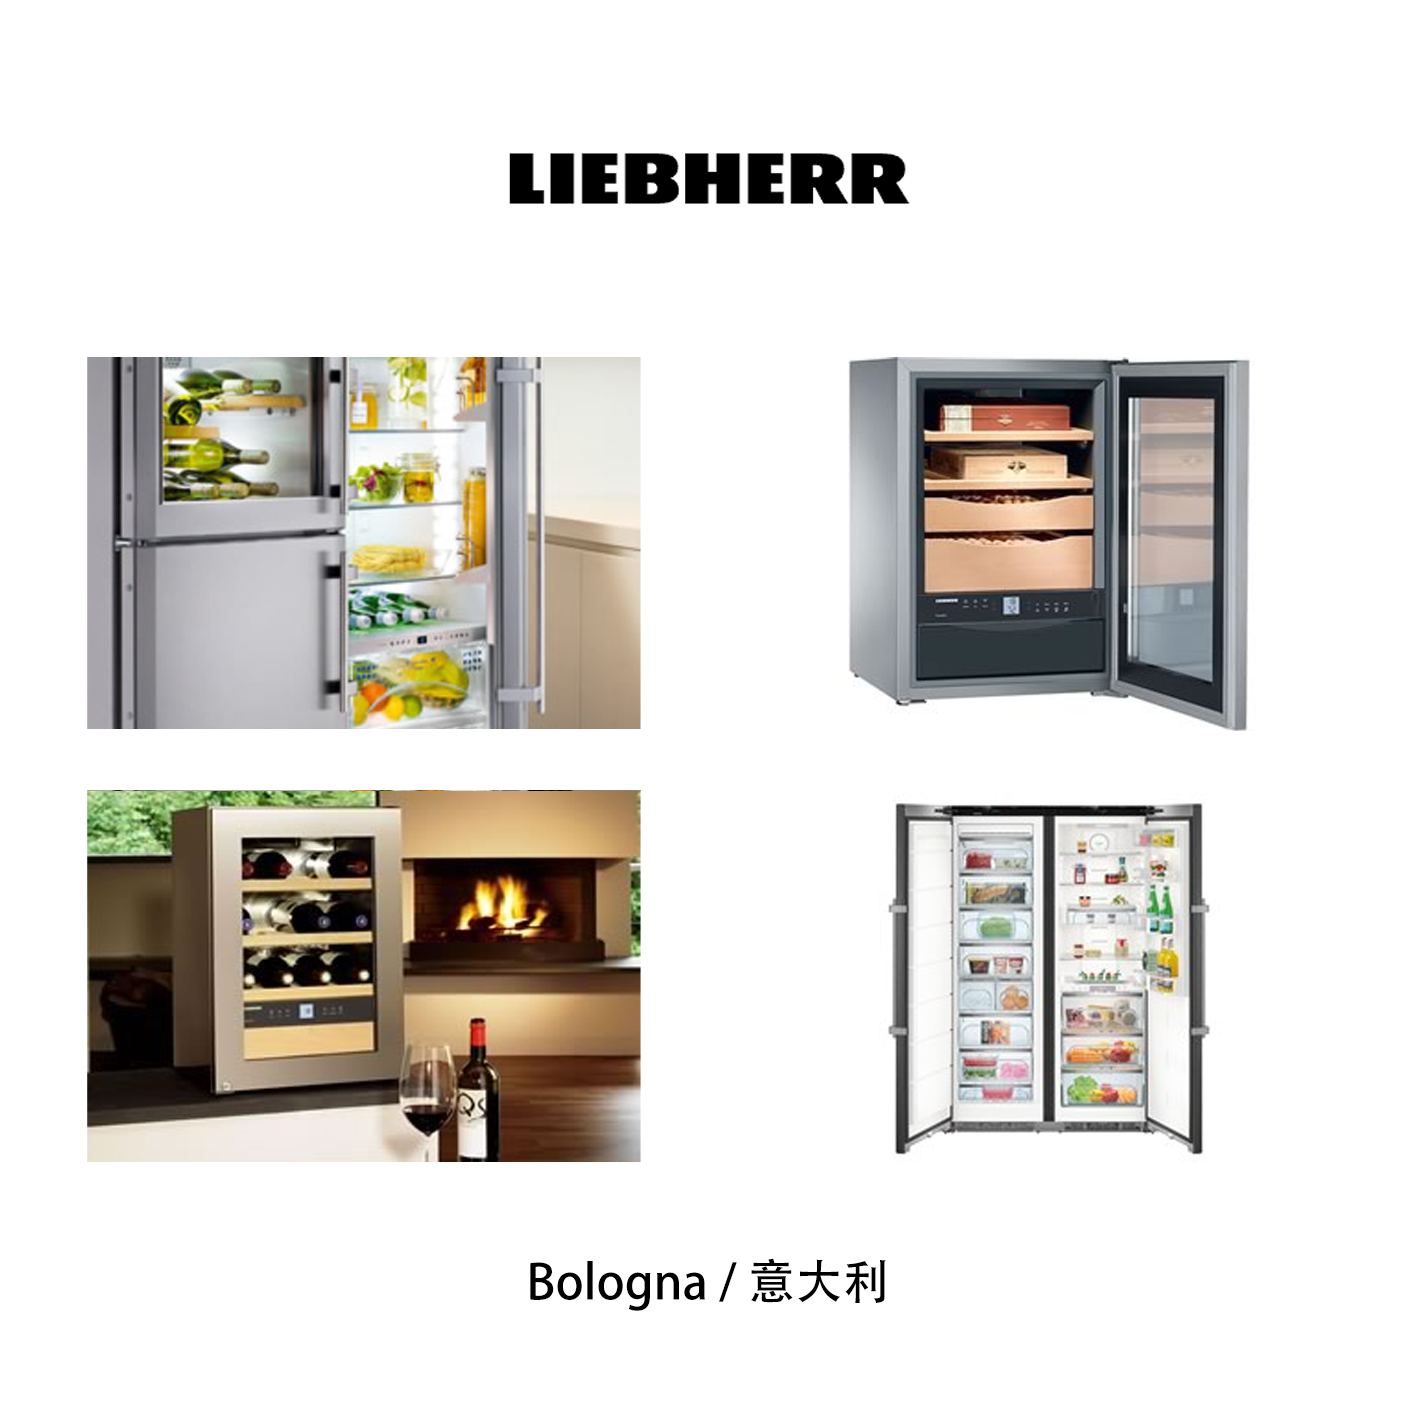 Liebherr 电器 冰箱